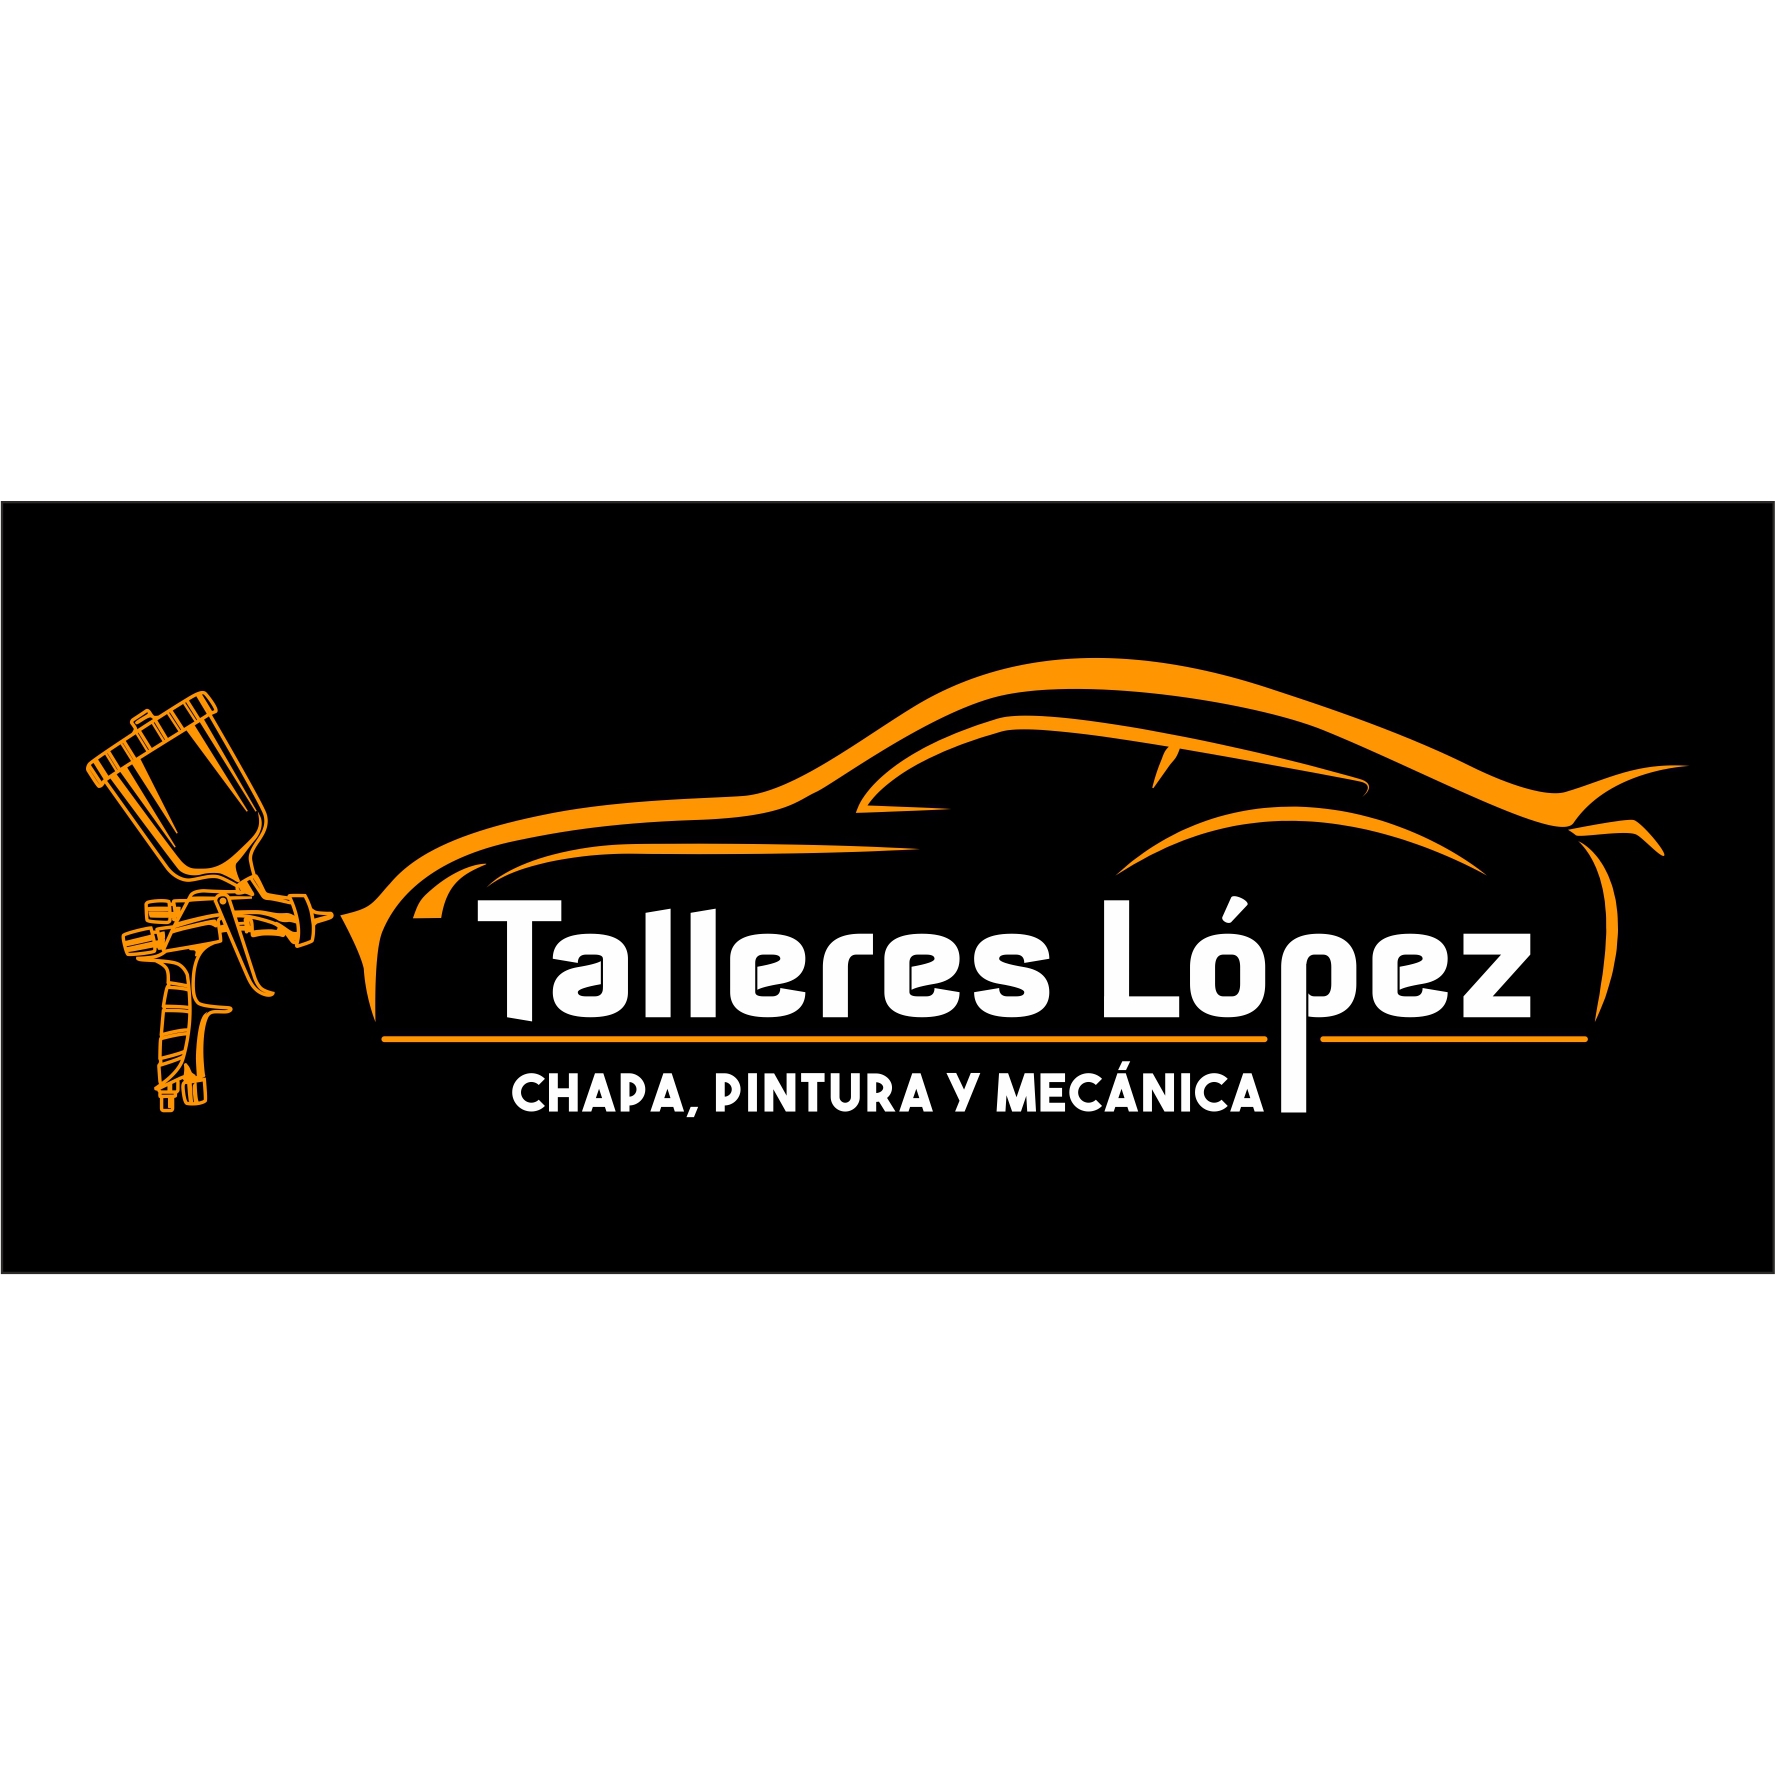 Talleres López - Auto Body Shop - Soria - 975 25 31 45 Spain | ShowMeLocal.com